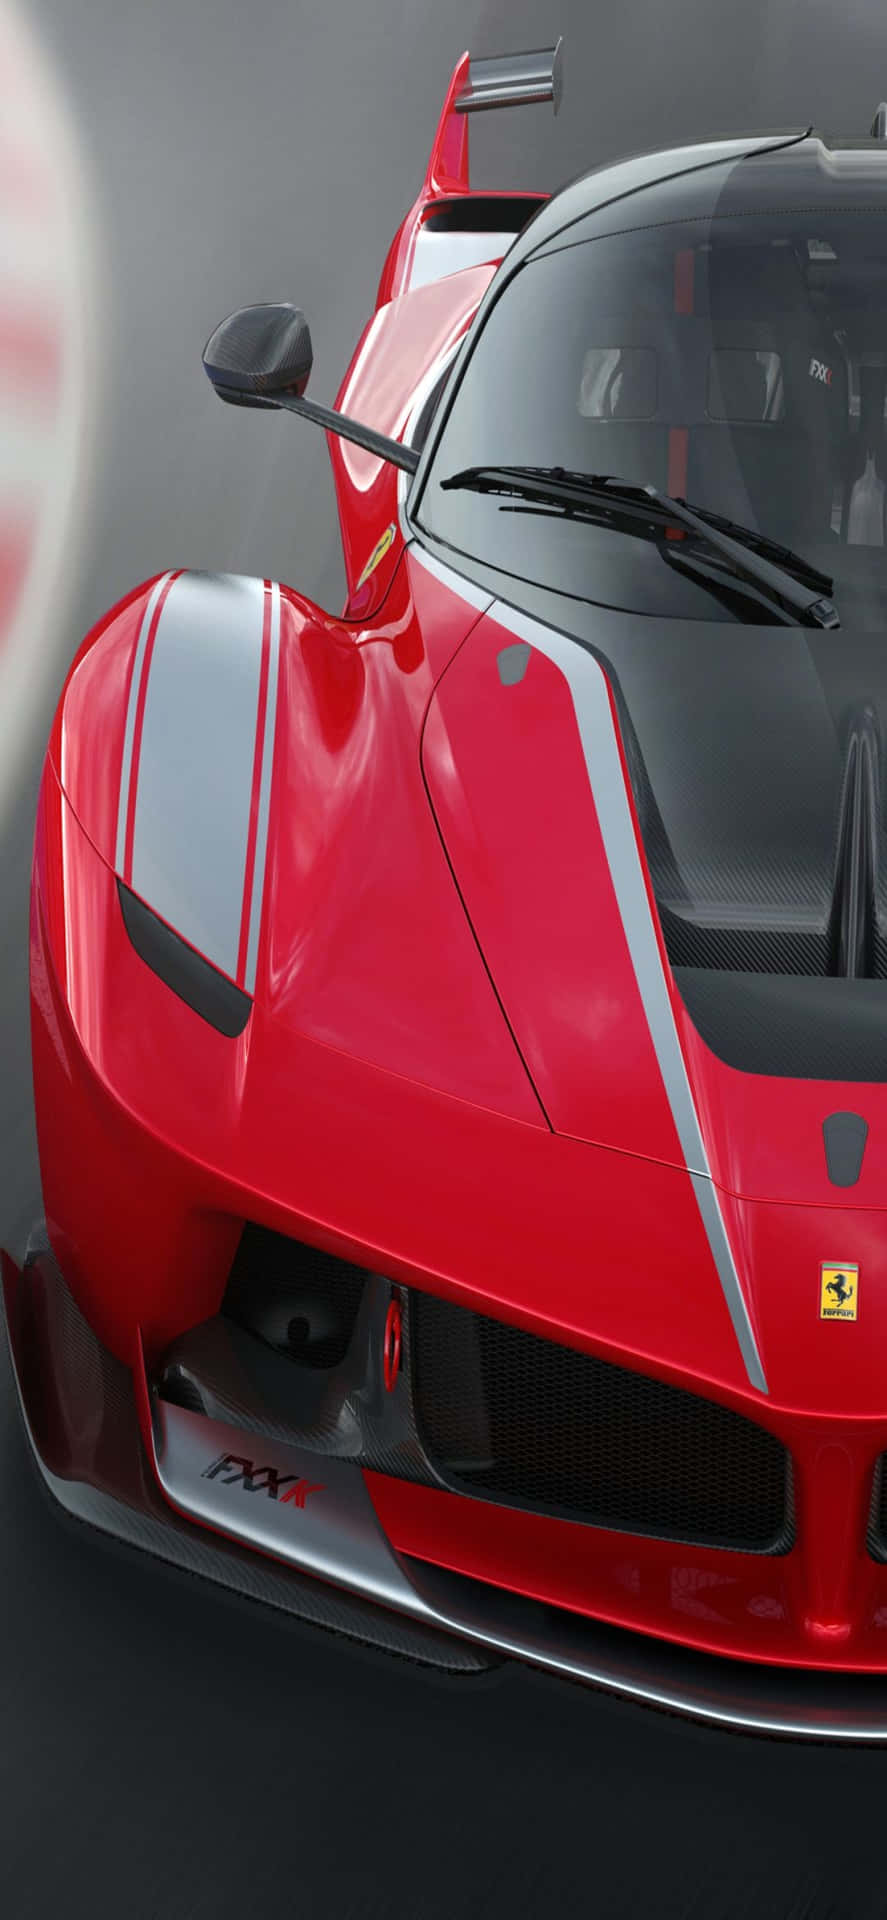 Iphonexs Max Ferrari Hintergrund Rotes Ferrari Fxx-k